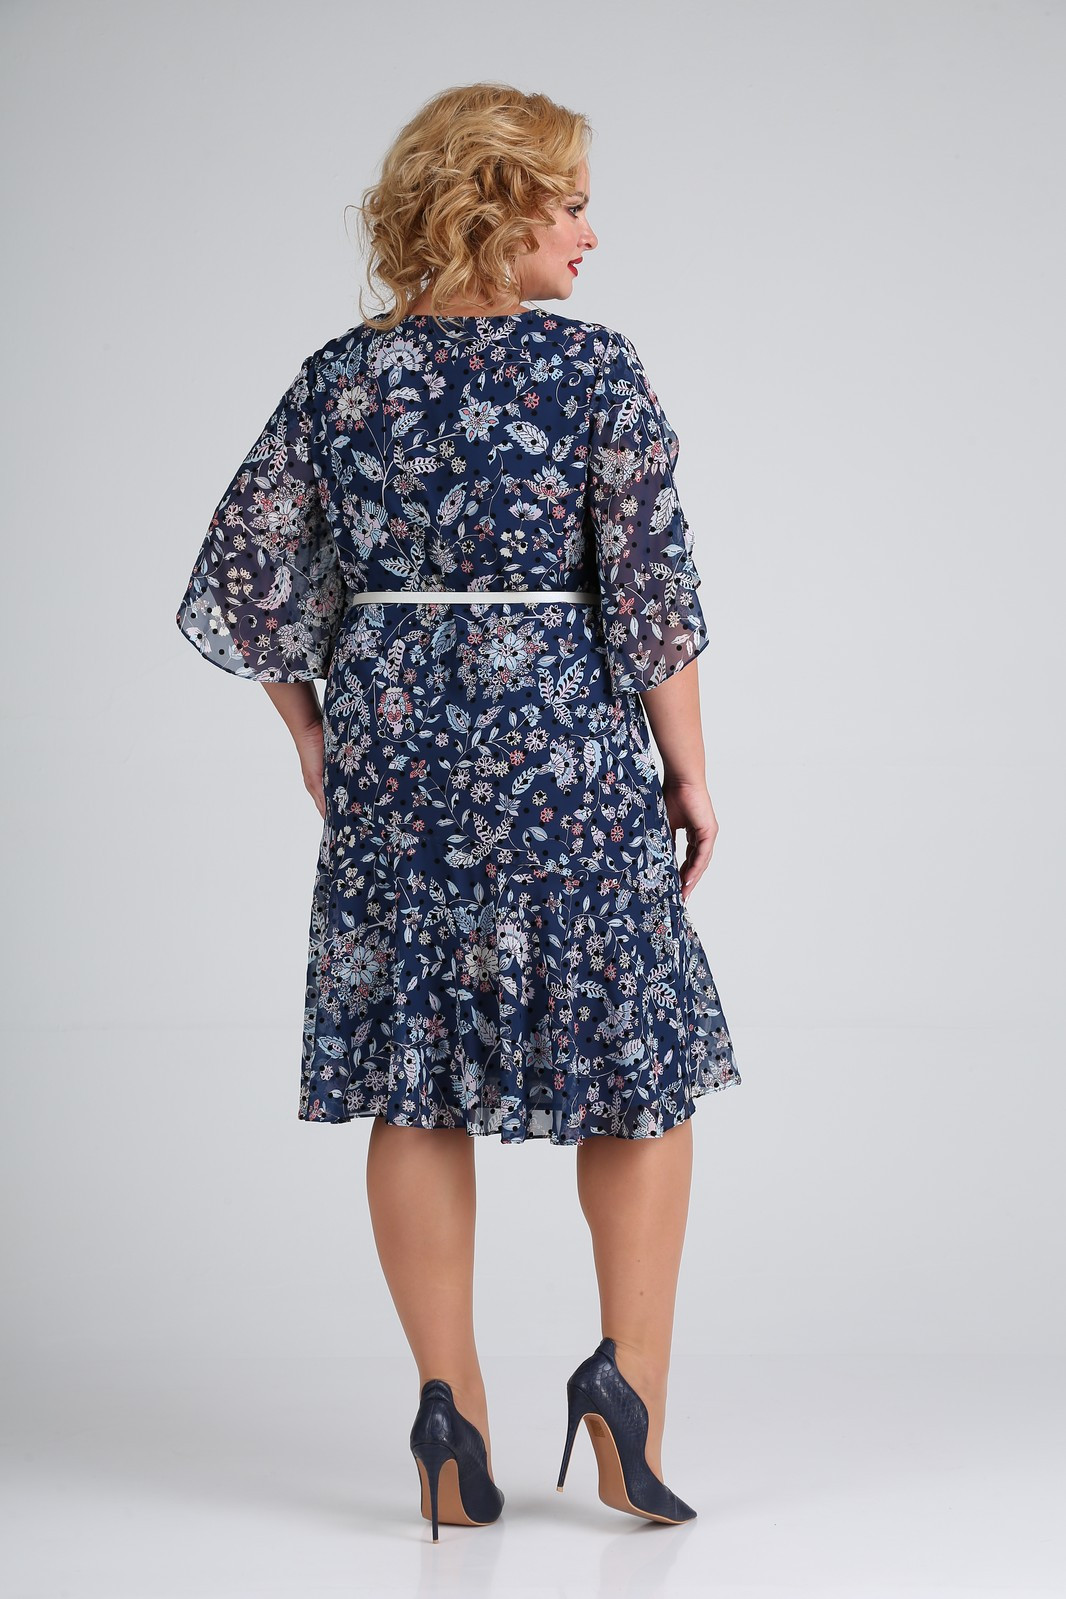 Платье Мода-Версаль 2321 т.синий